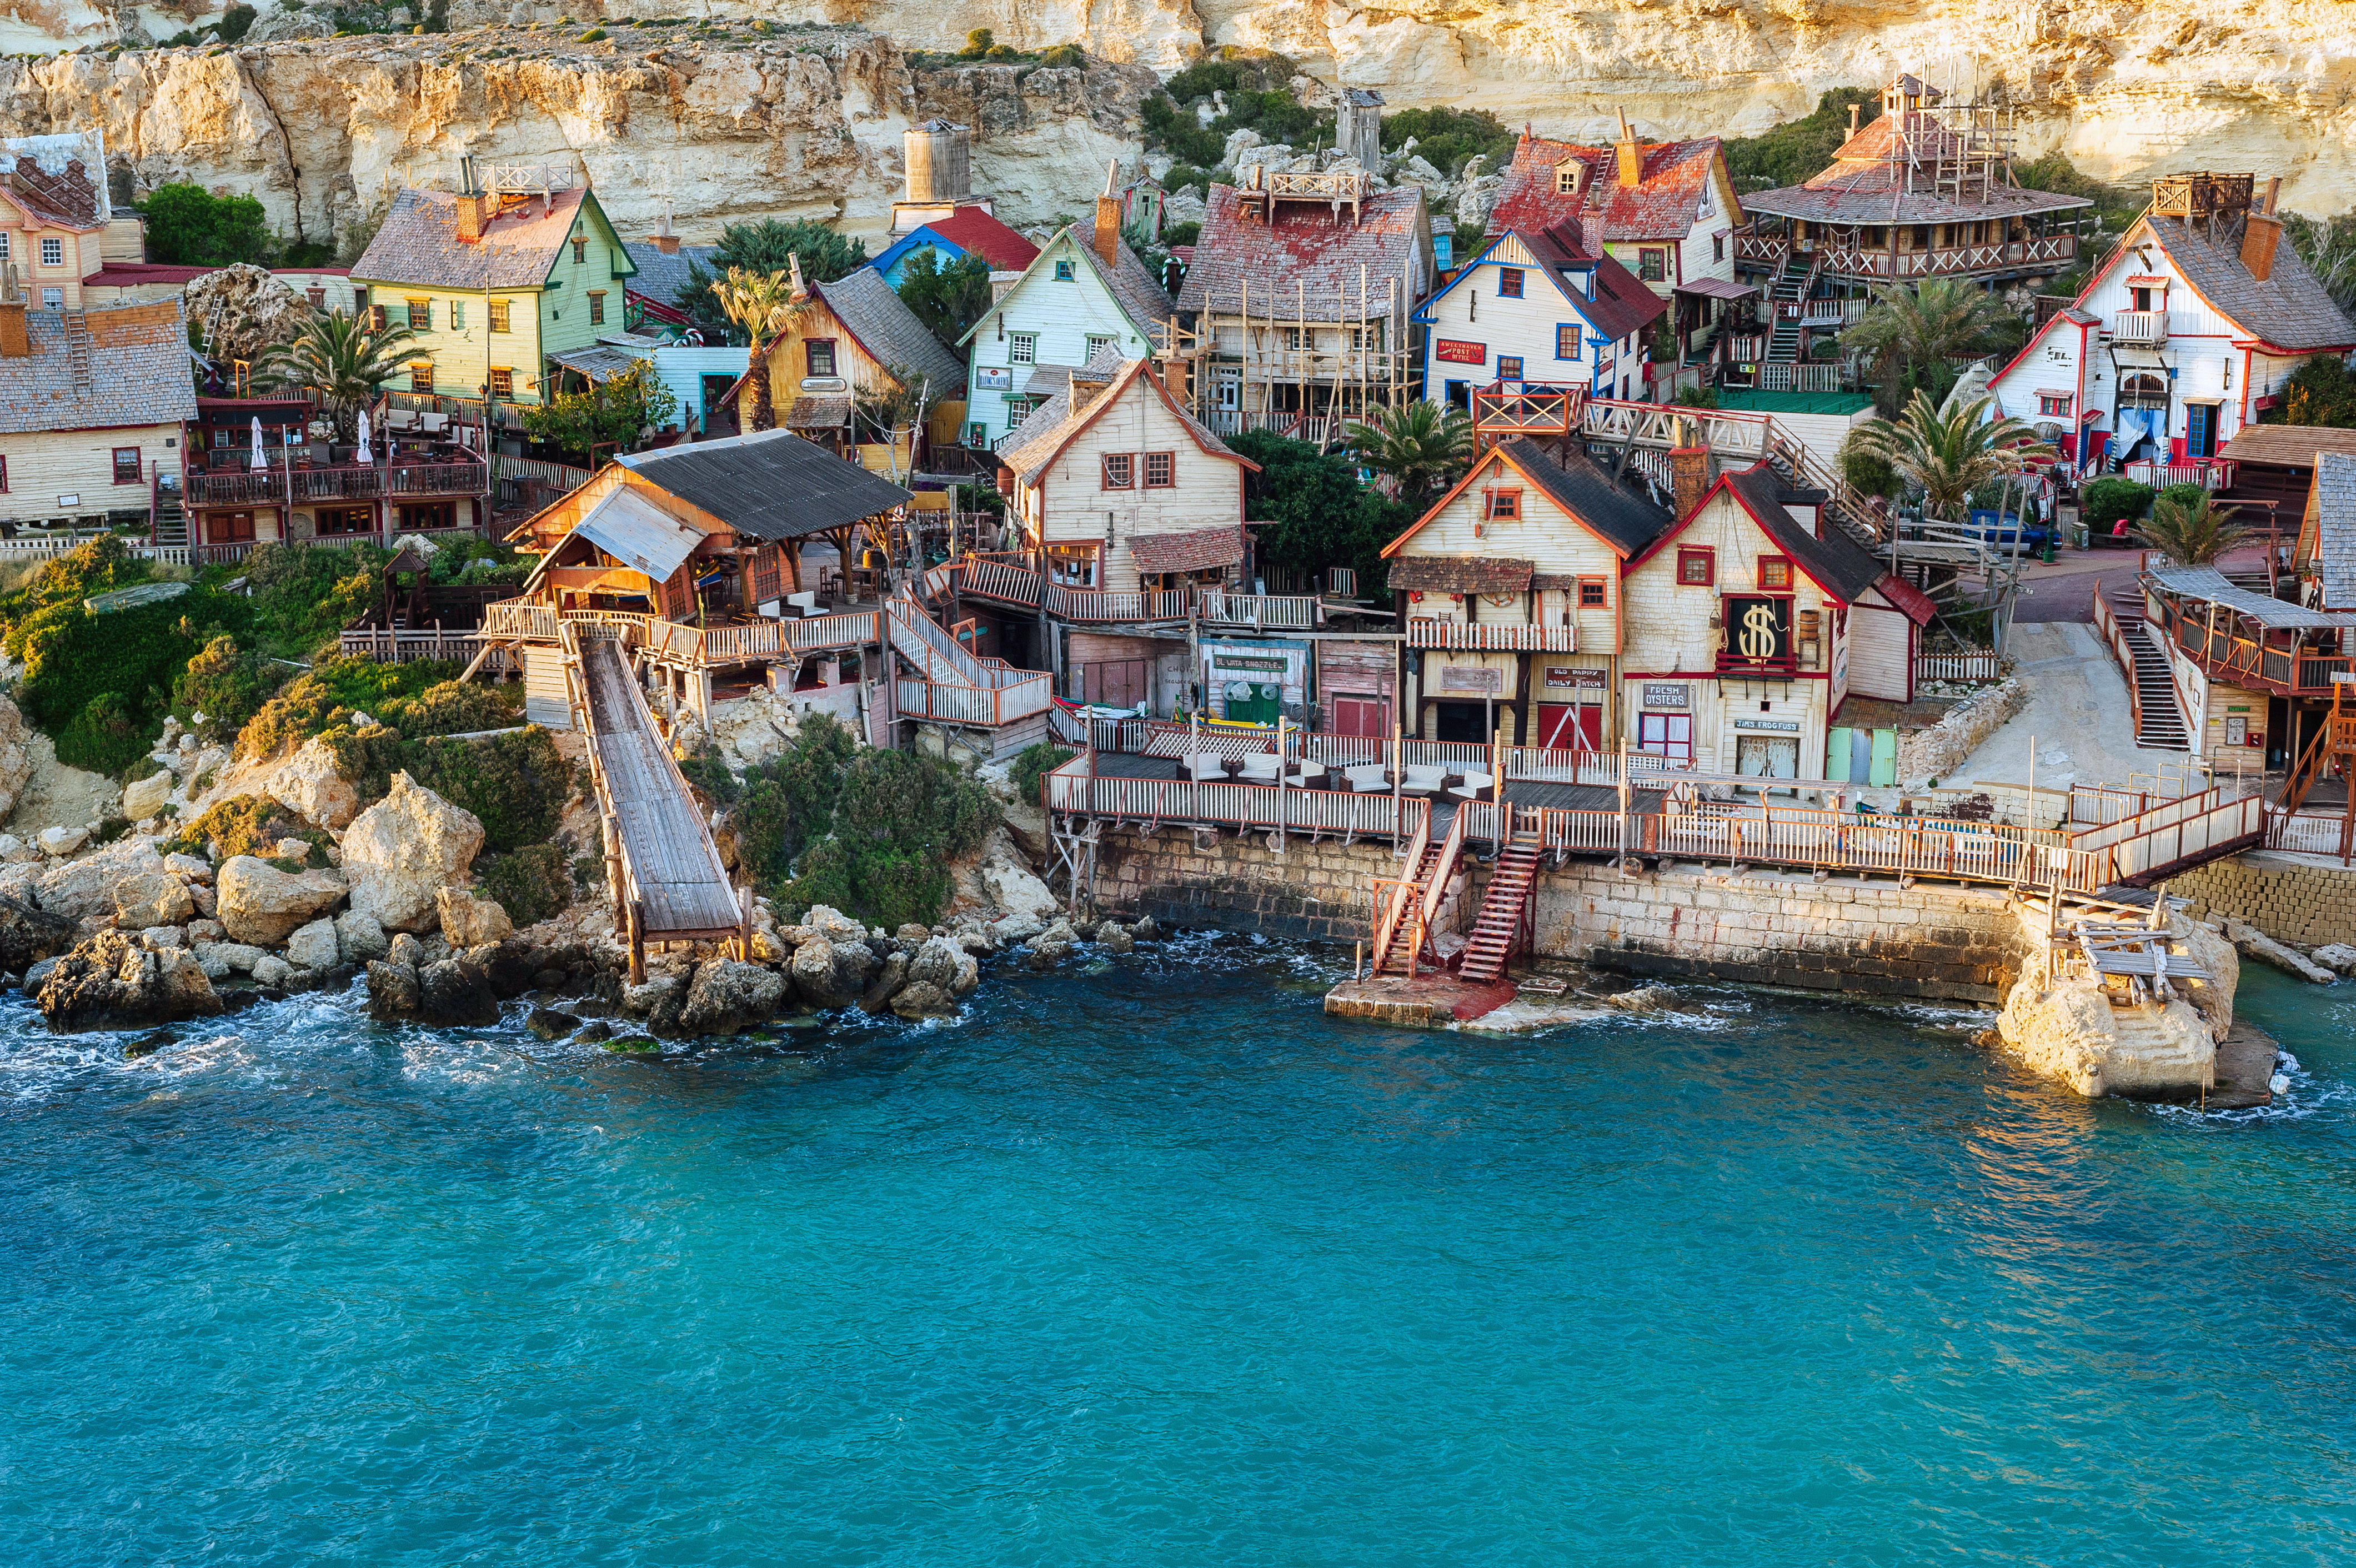 The famous Popeye Village at Anchor Bay, Mellieha, Malta